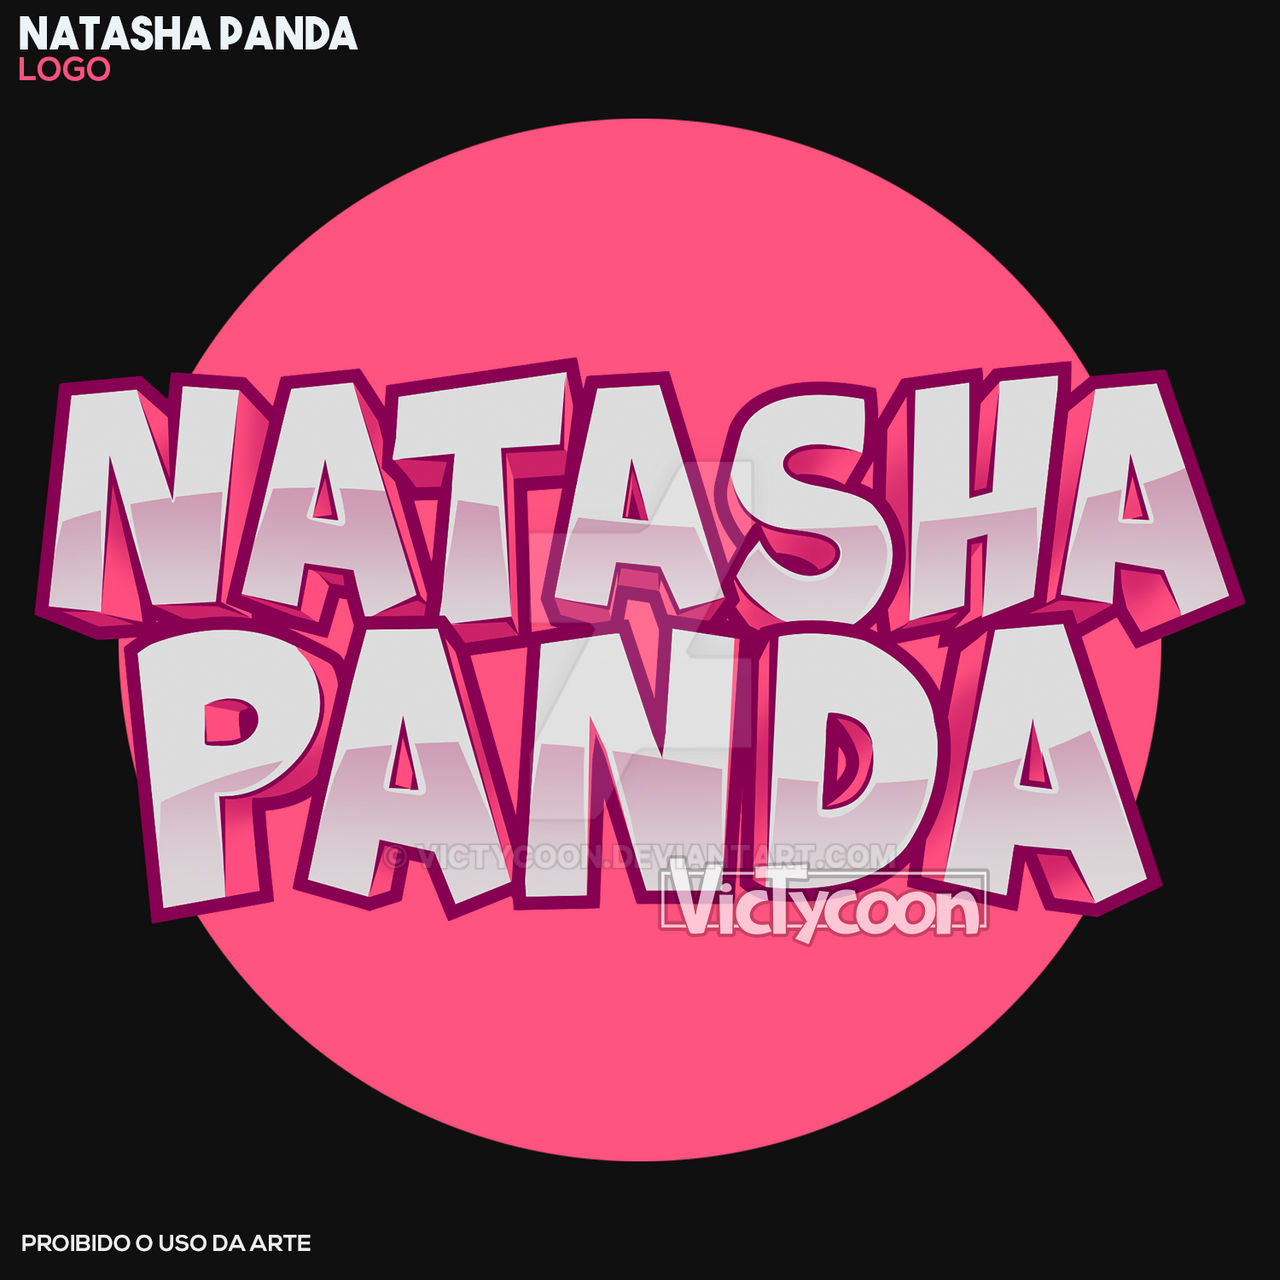 AVATAR - Natasha Panda () by VicTycoon on DeviantArt